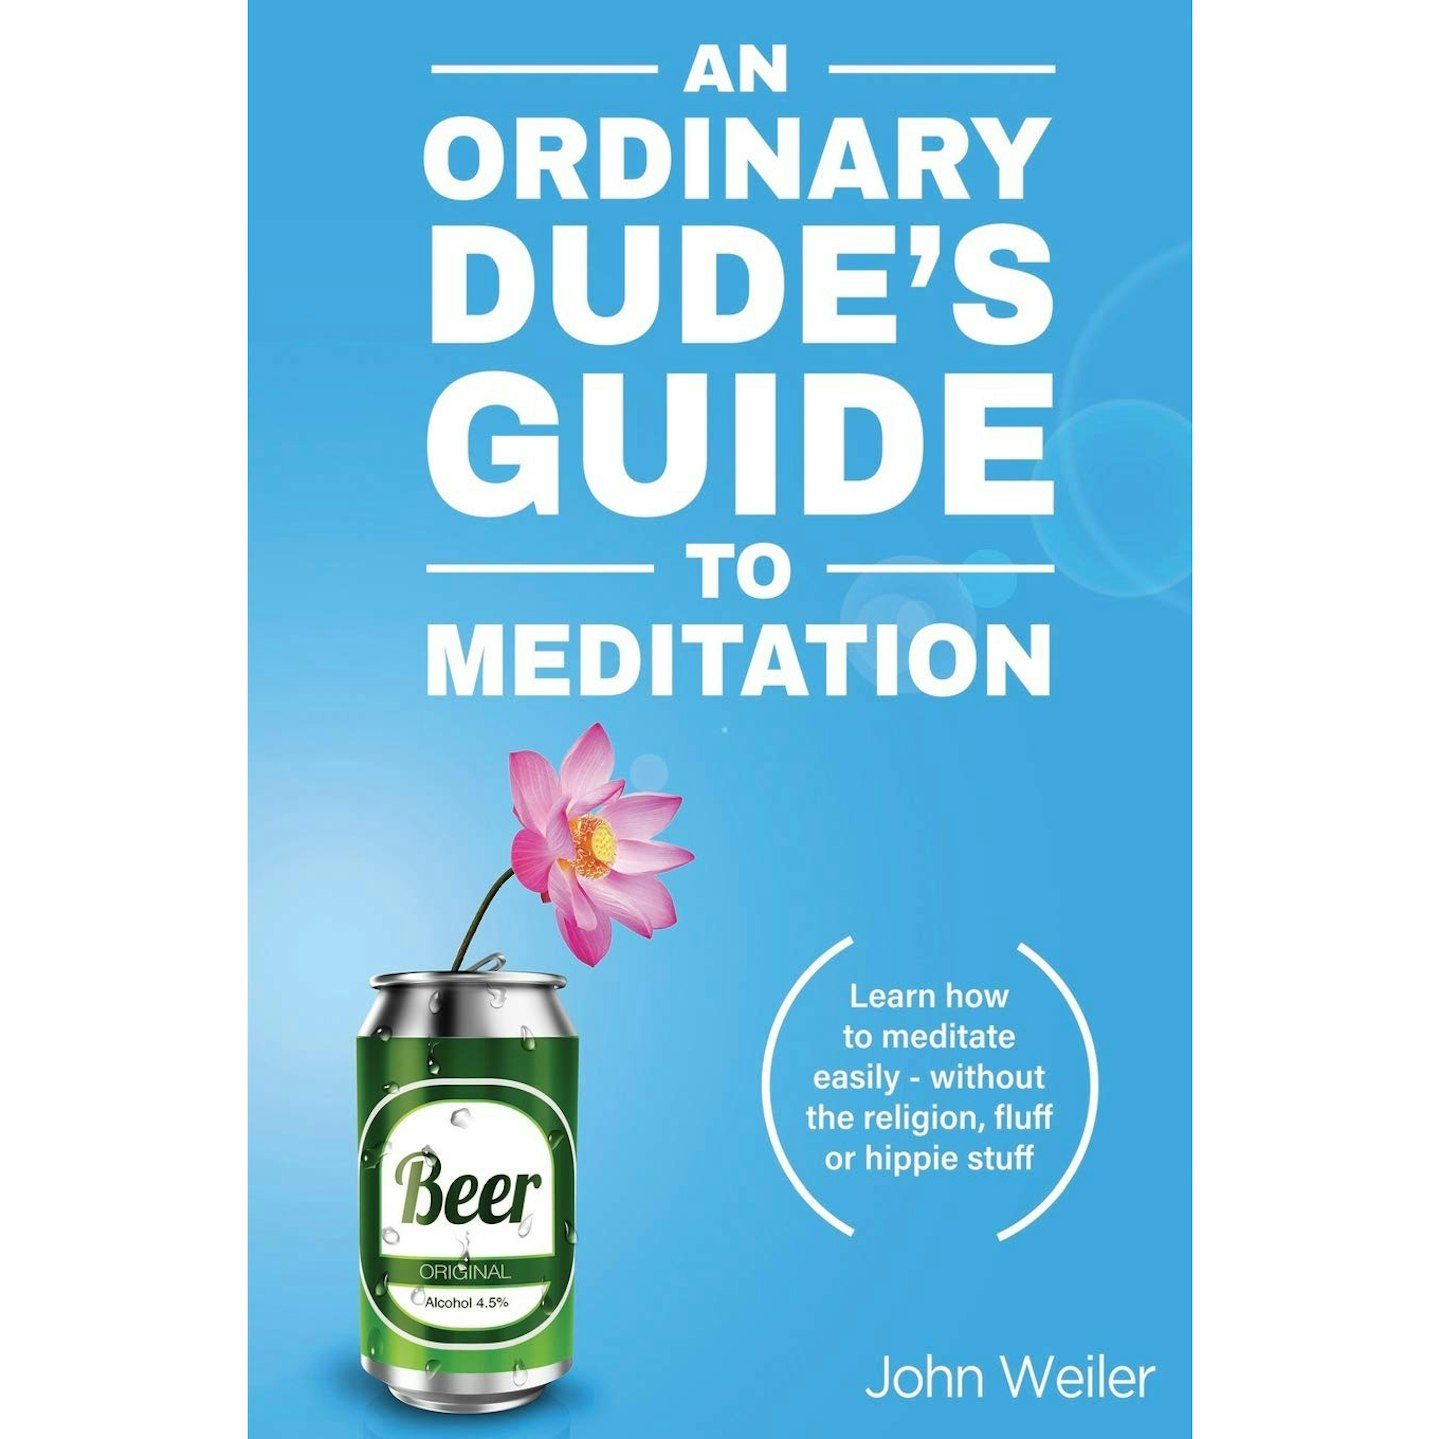 An Ordinary Dudeu2019s Guide to Meditation by John Weiler